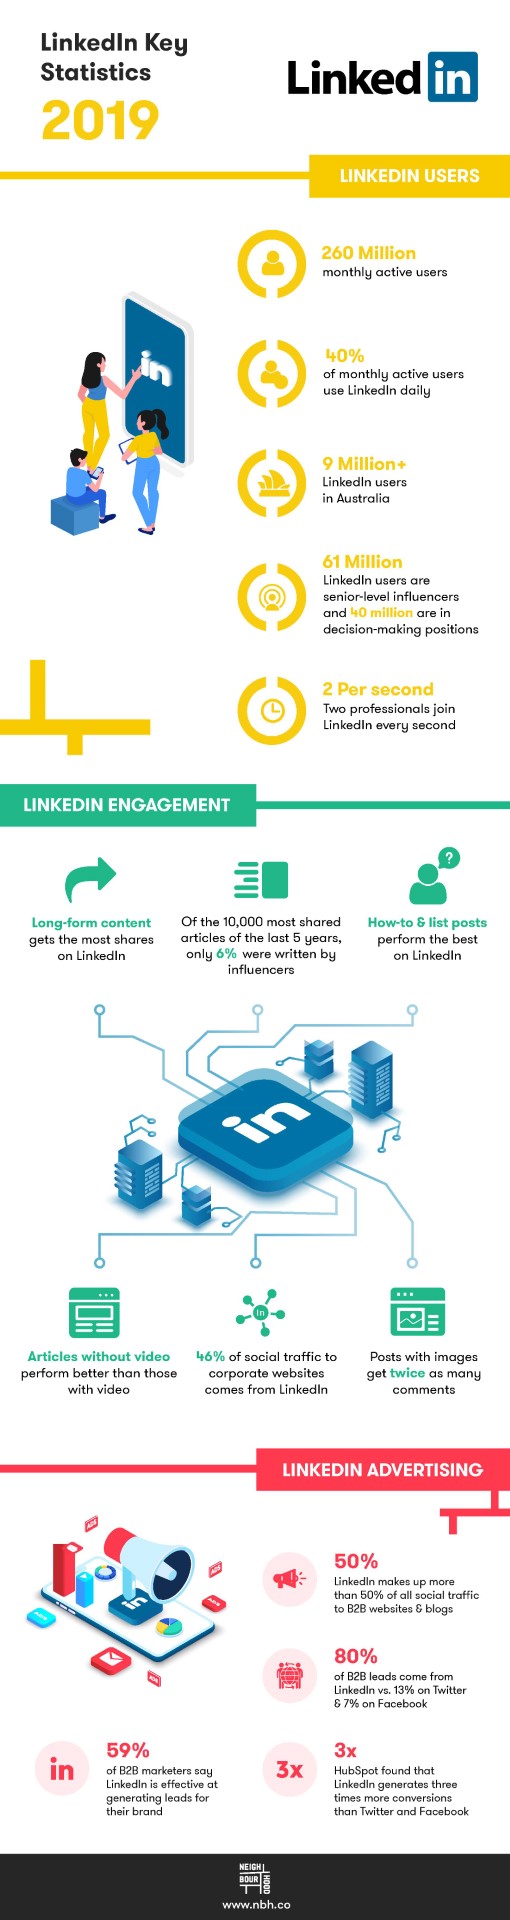 LinkedIn-Statistics-Infographic-2019